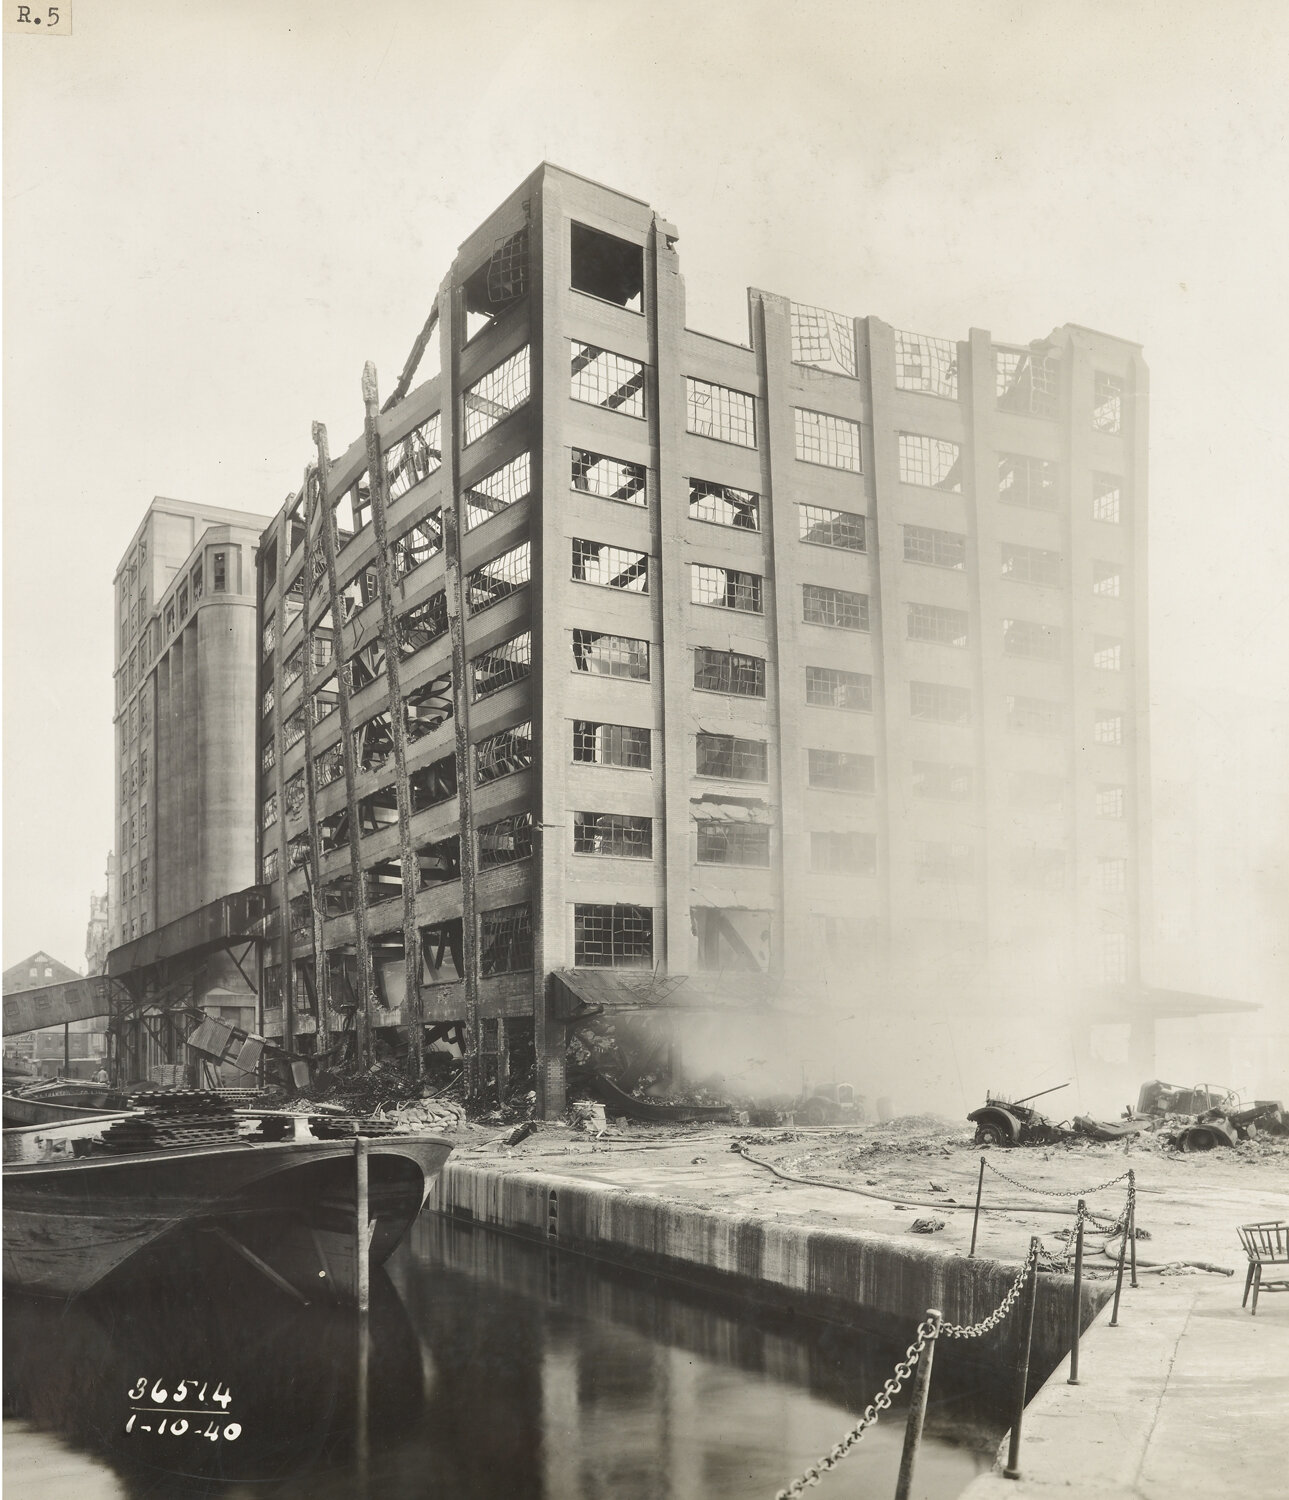 Burnt out store building at Royal Albert Dock after air raid damage, October 1940